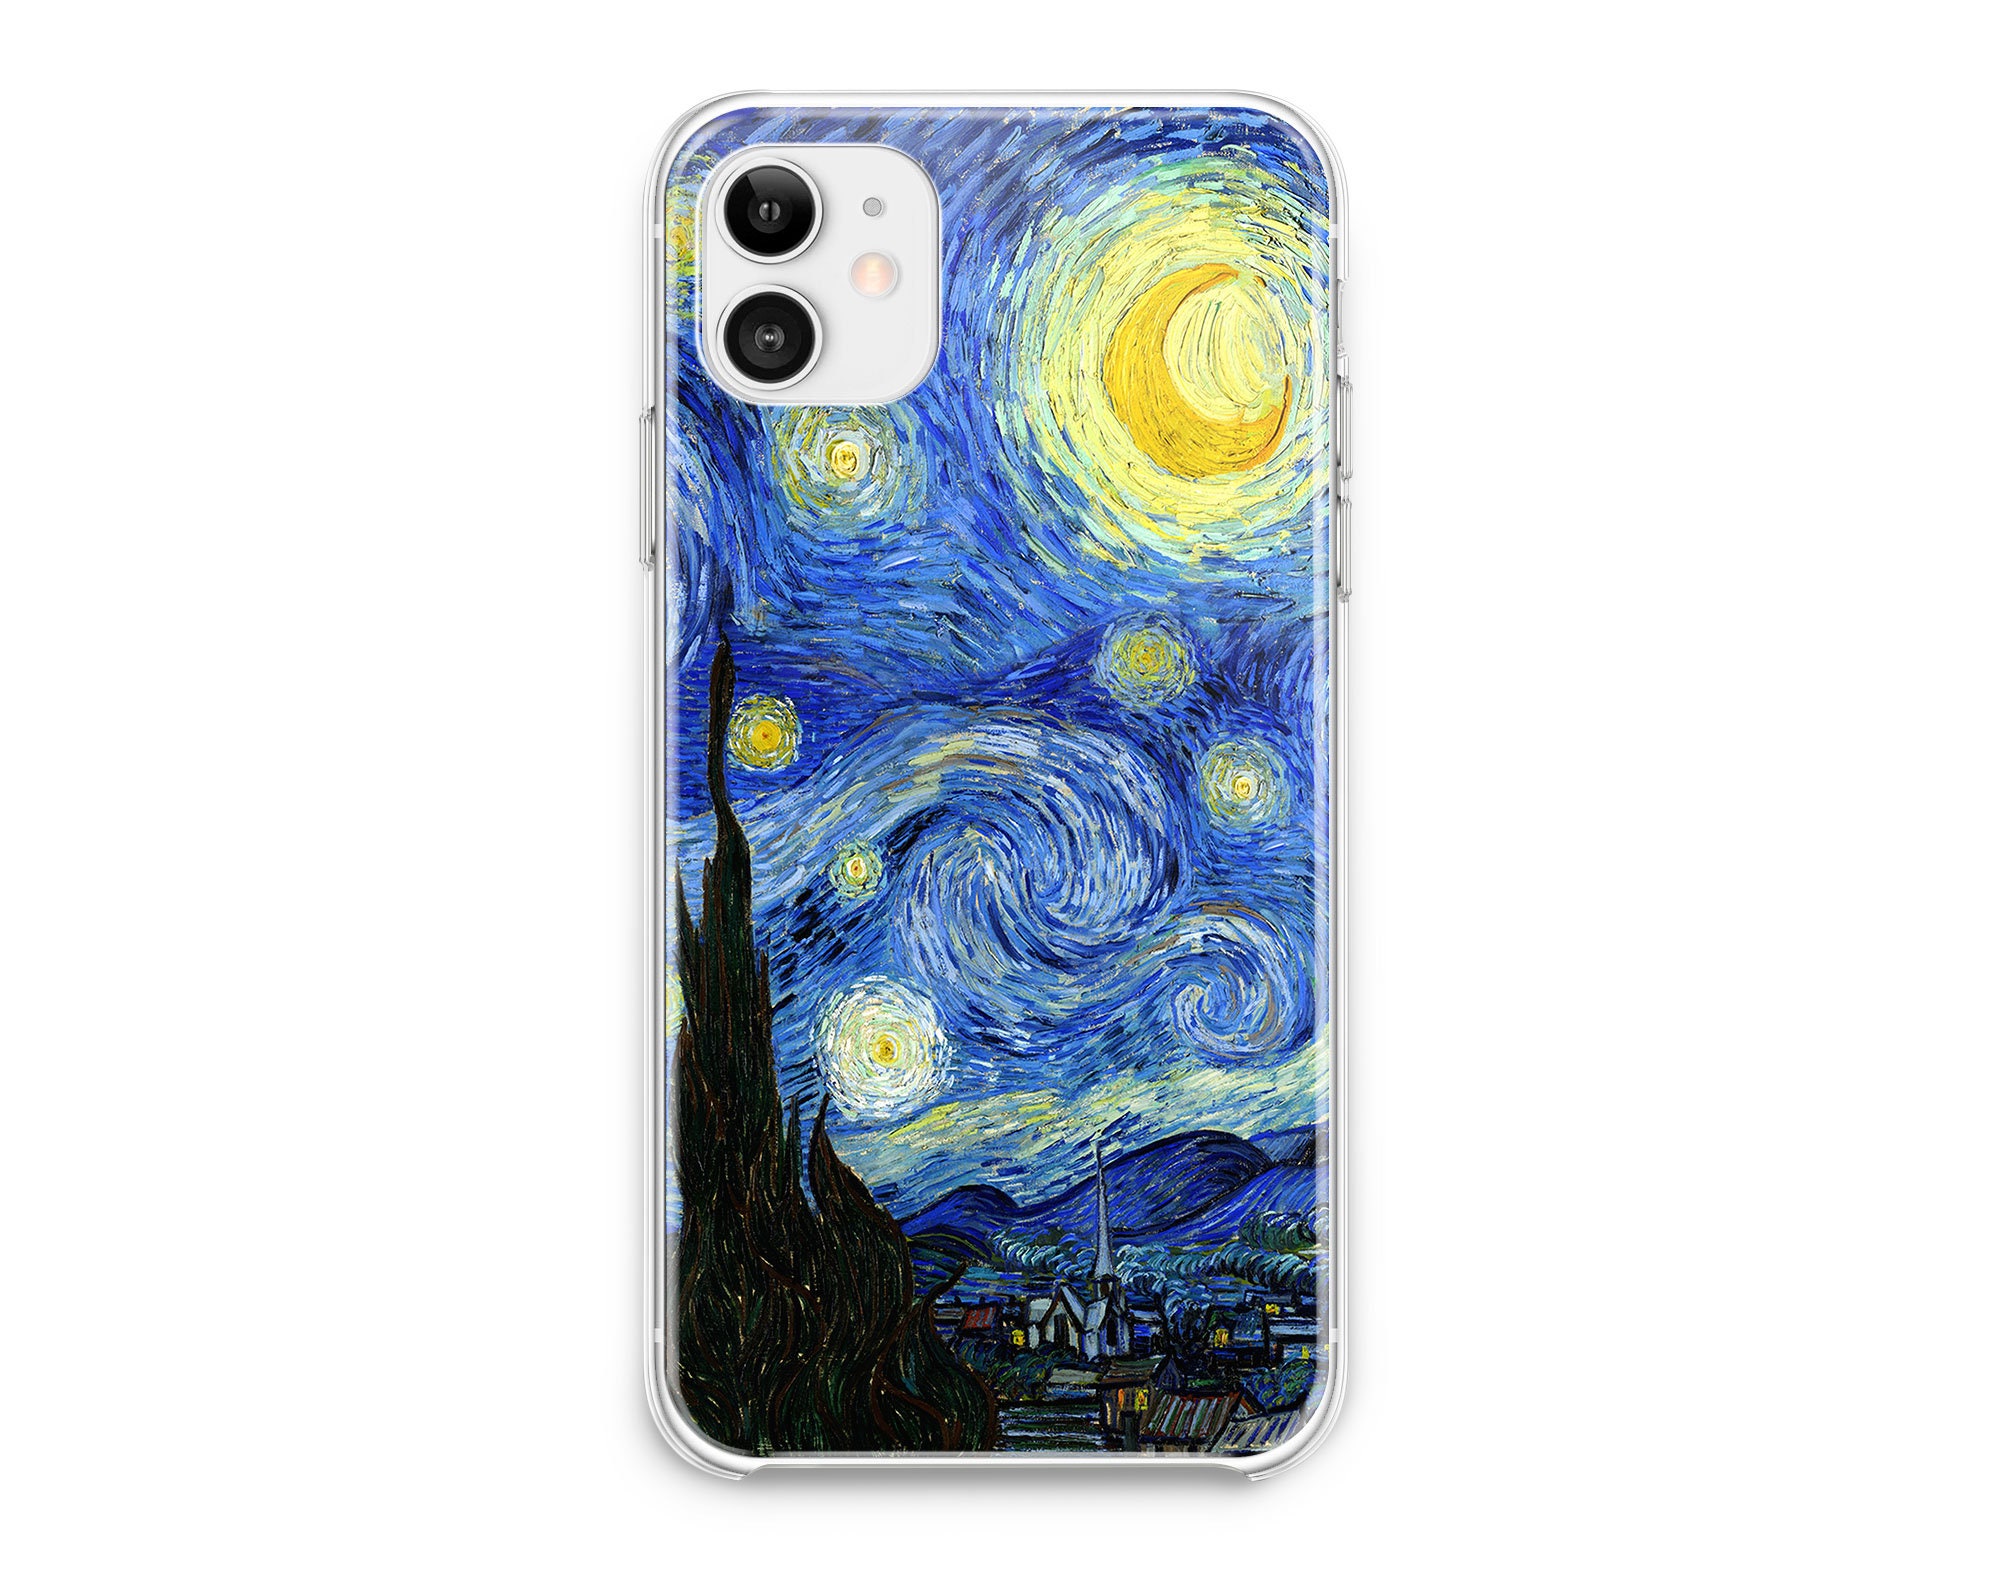 The Starry Night Van Gogh iPhone case